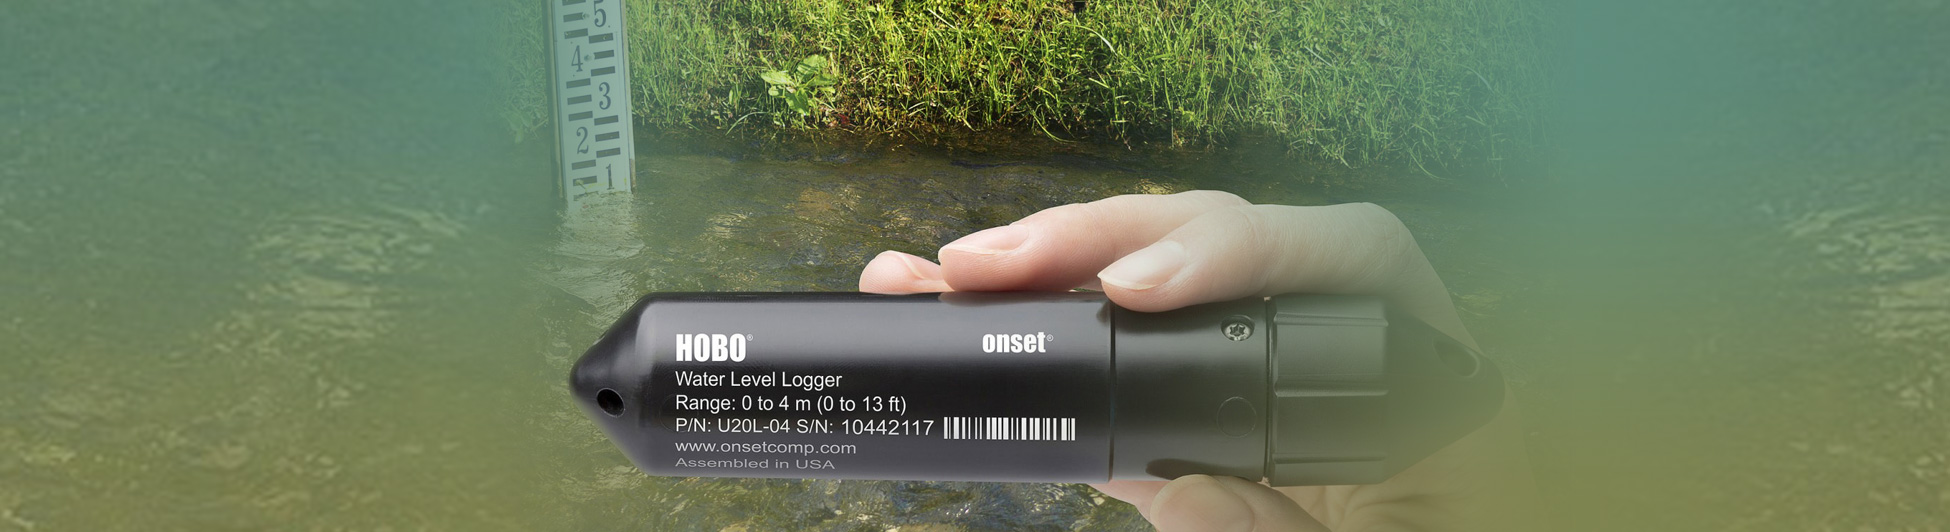 HOBO waterproof data logger